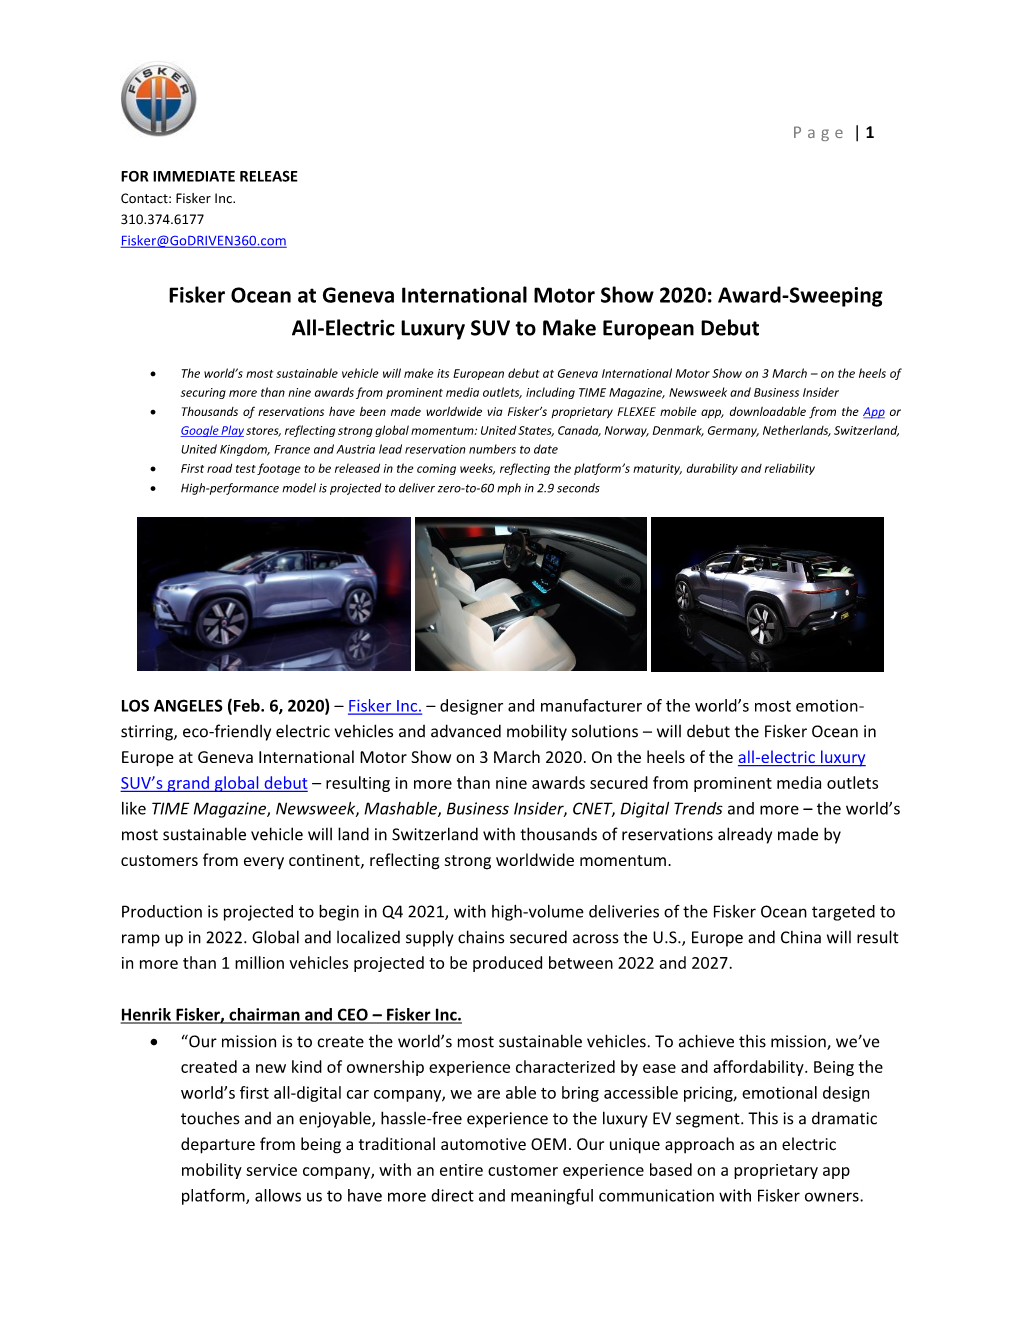 Fisker Ocean at Geneva International Motor Show 2020: Award-Sweeping All-Electric Luxury SUV to Make European Debut